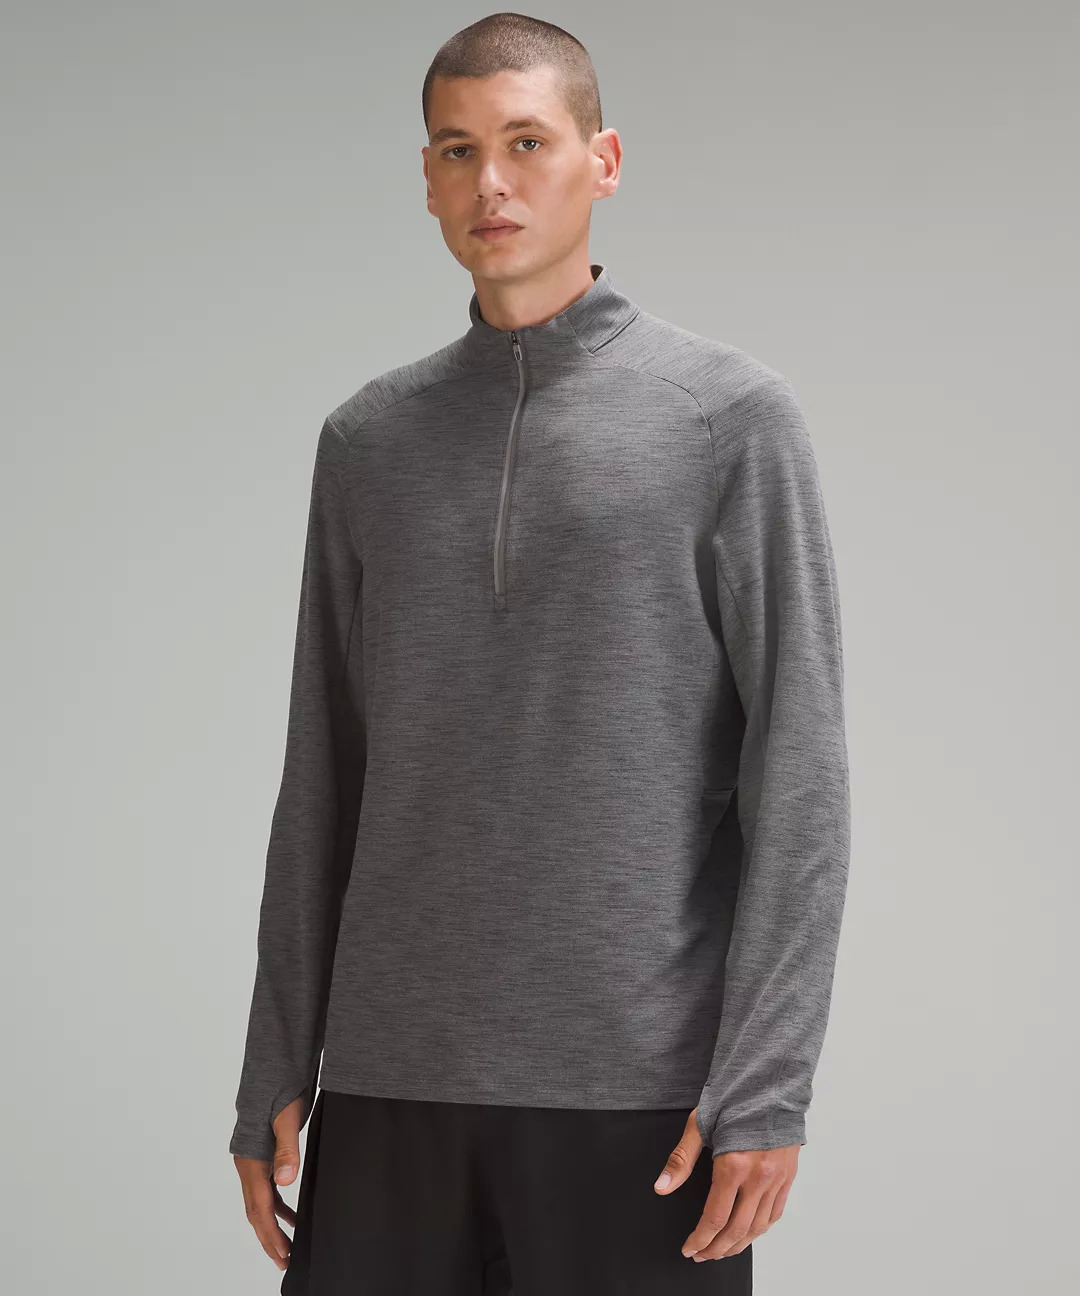 lululemon Men's Surge Warm Half Zip Pullover (Grey Vapor) $59 + Free Shipping